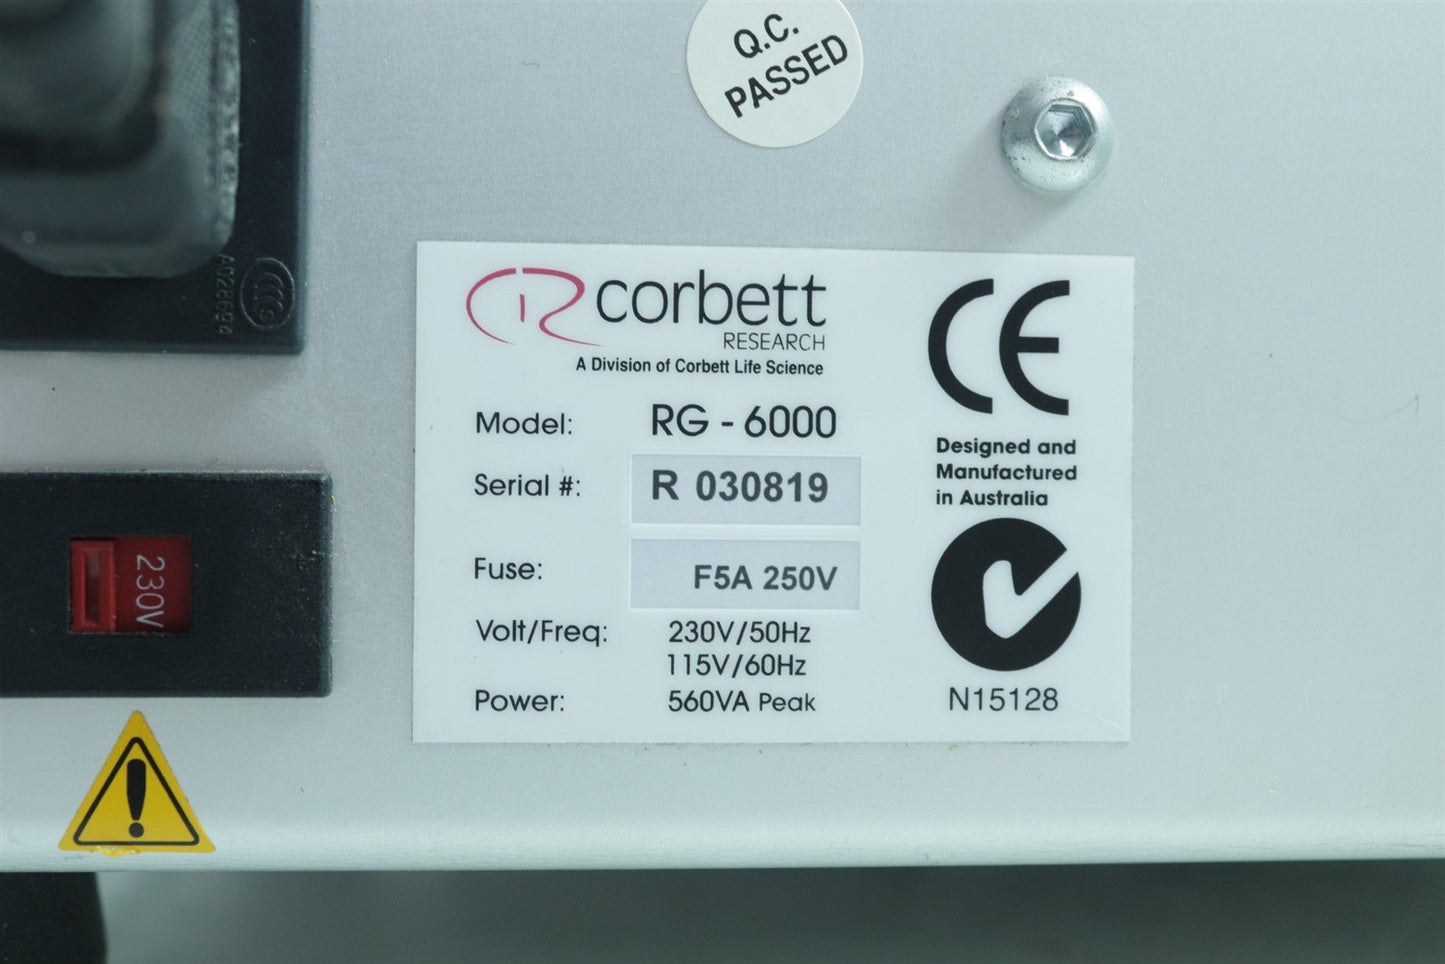 Corbett (Qiagen) Rotor-Gene 2PLEX RG-6000 Real Time PCR Analayser Fully Tested